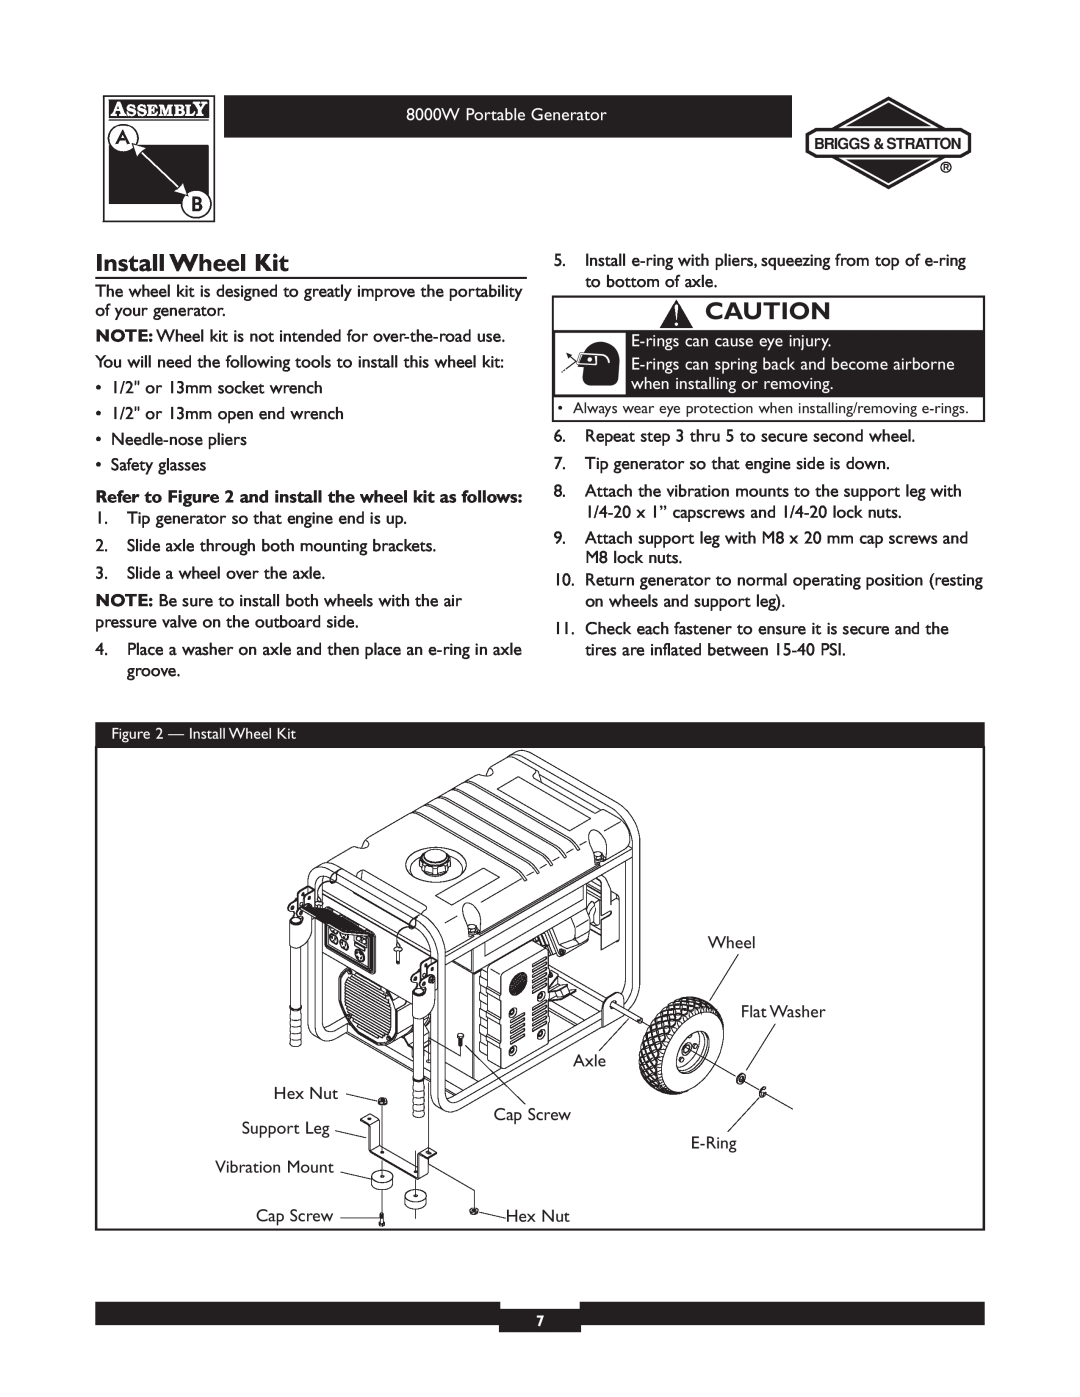 Briggs & Stratton 030210-2 manual Install Wheel Kit, E-rings can cause eye injury, 8000W Portable Generator 